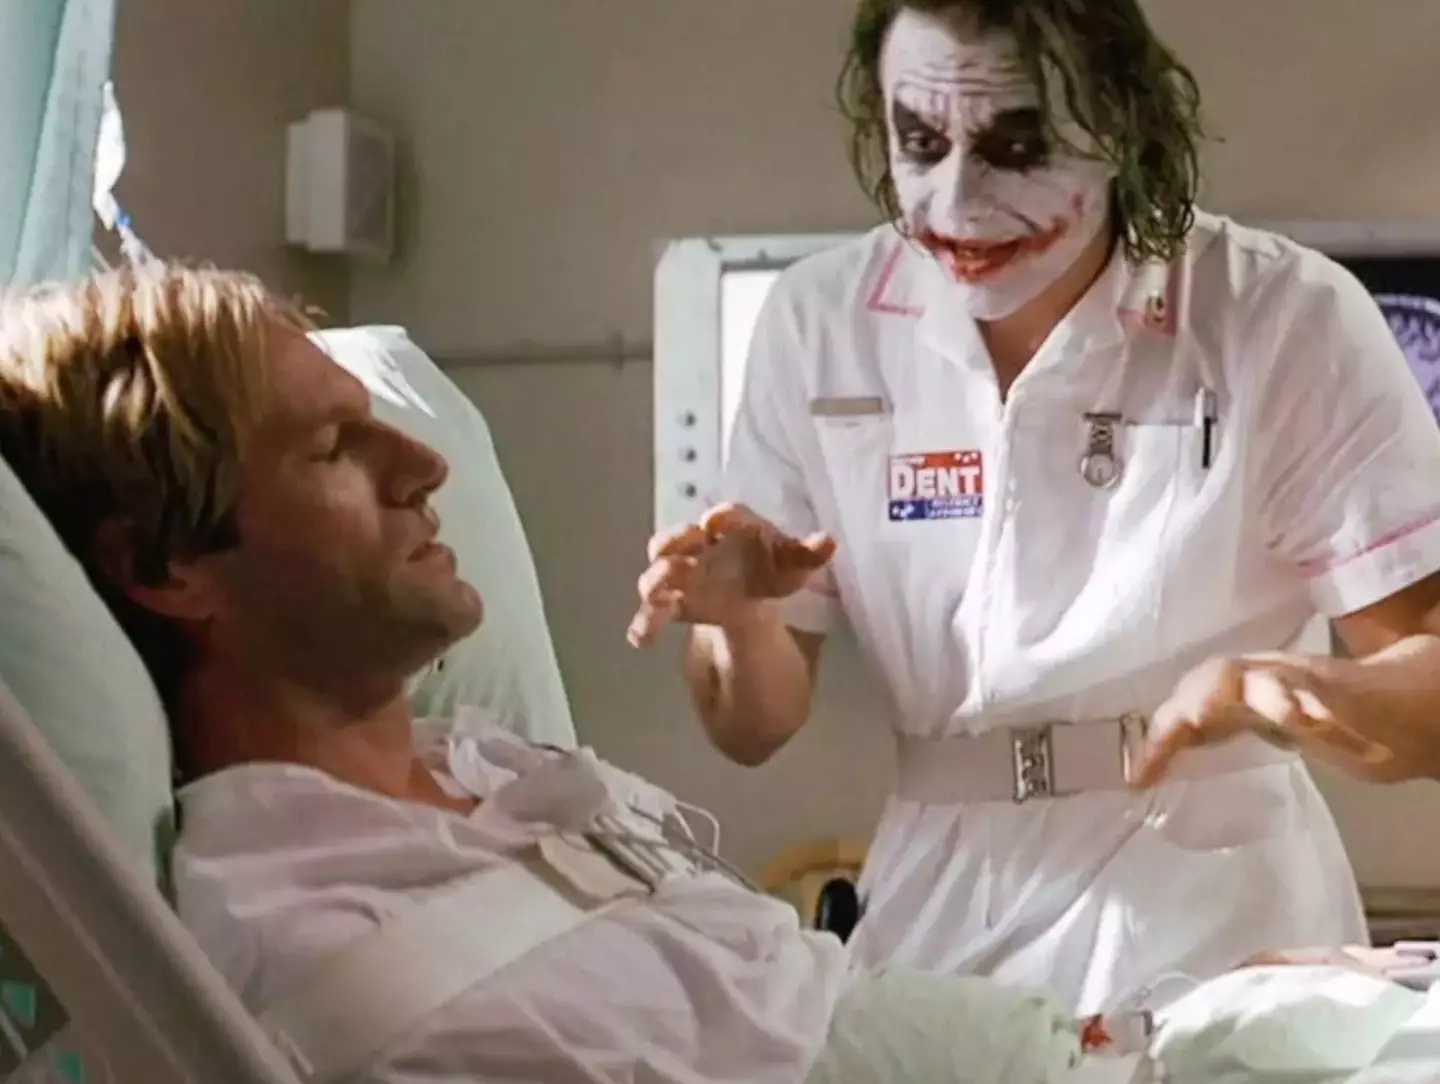 Heath Ledger in character as the Joker.